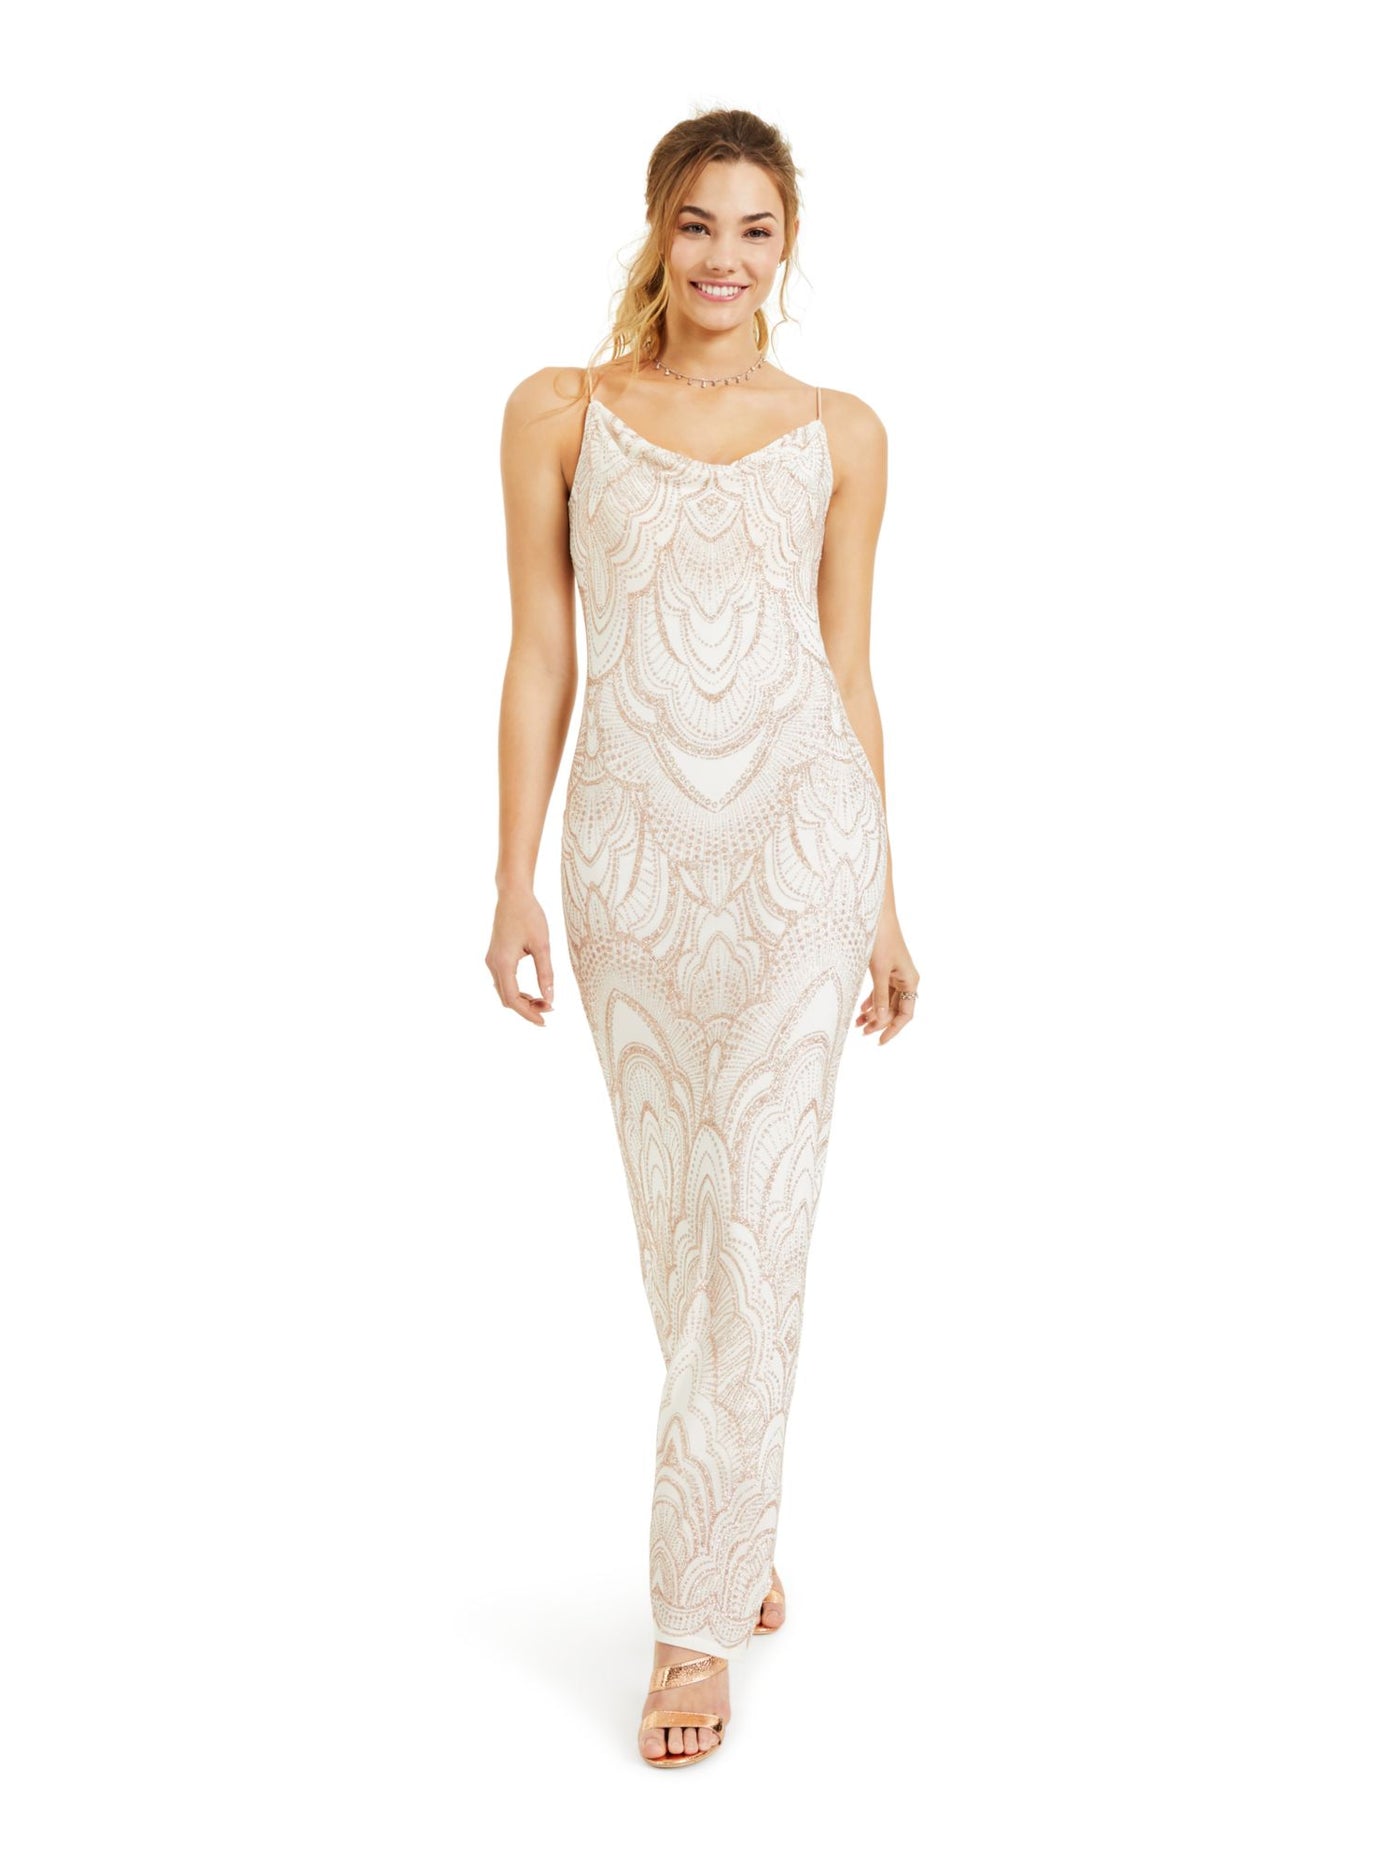 JUMP APPAREL Womens White Glitter Gown Silhouette Printed Spaghetti Strap Cowl Neck Full-Length Evening Dress Juniors 11\12